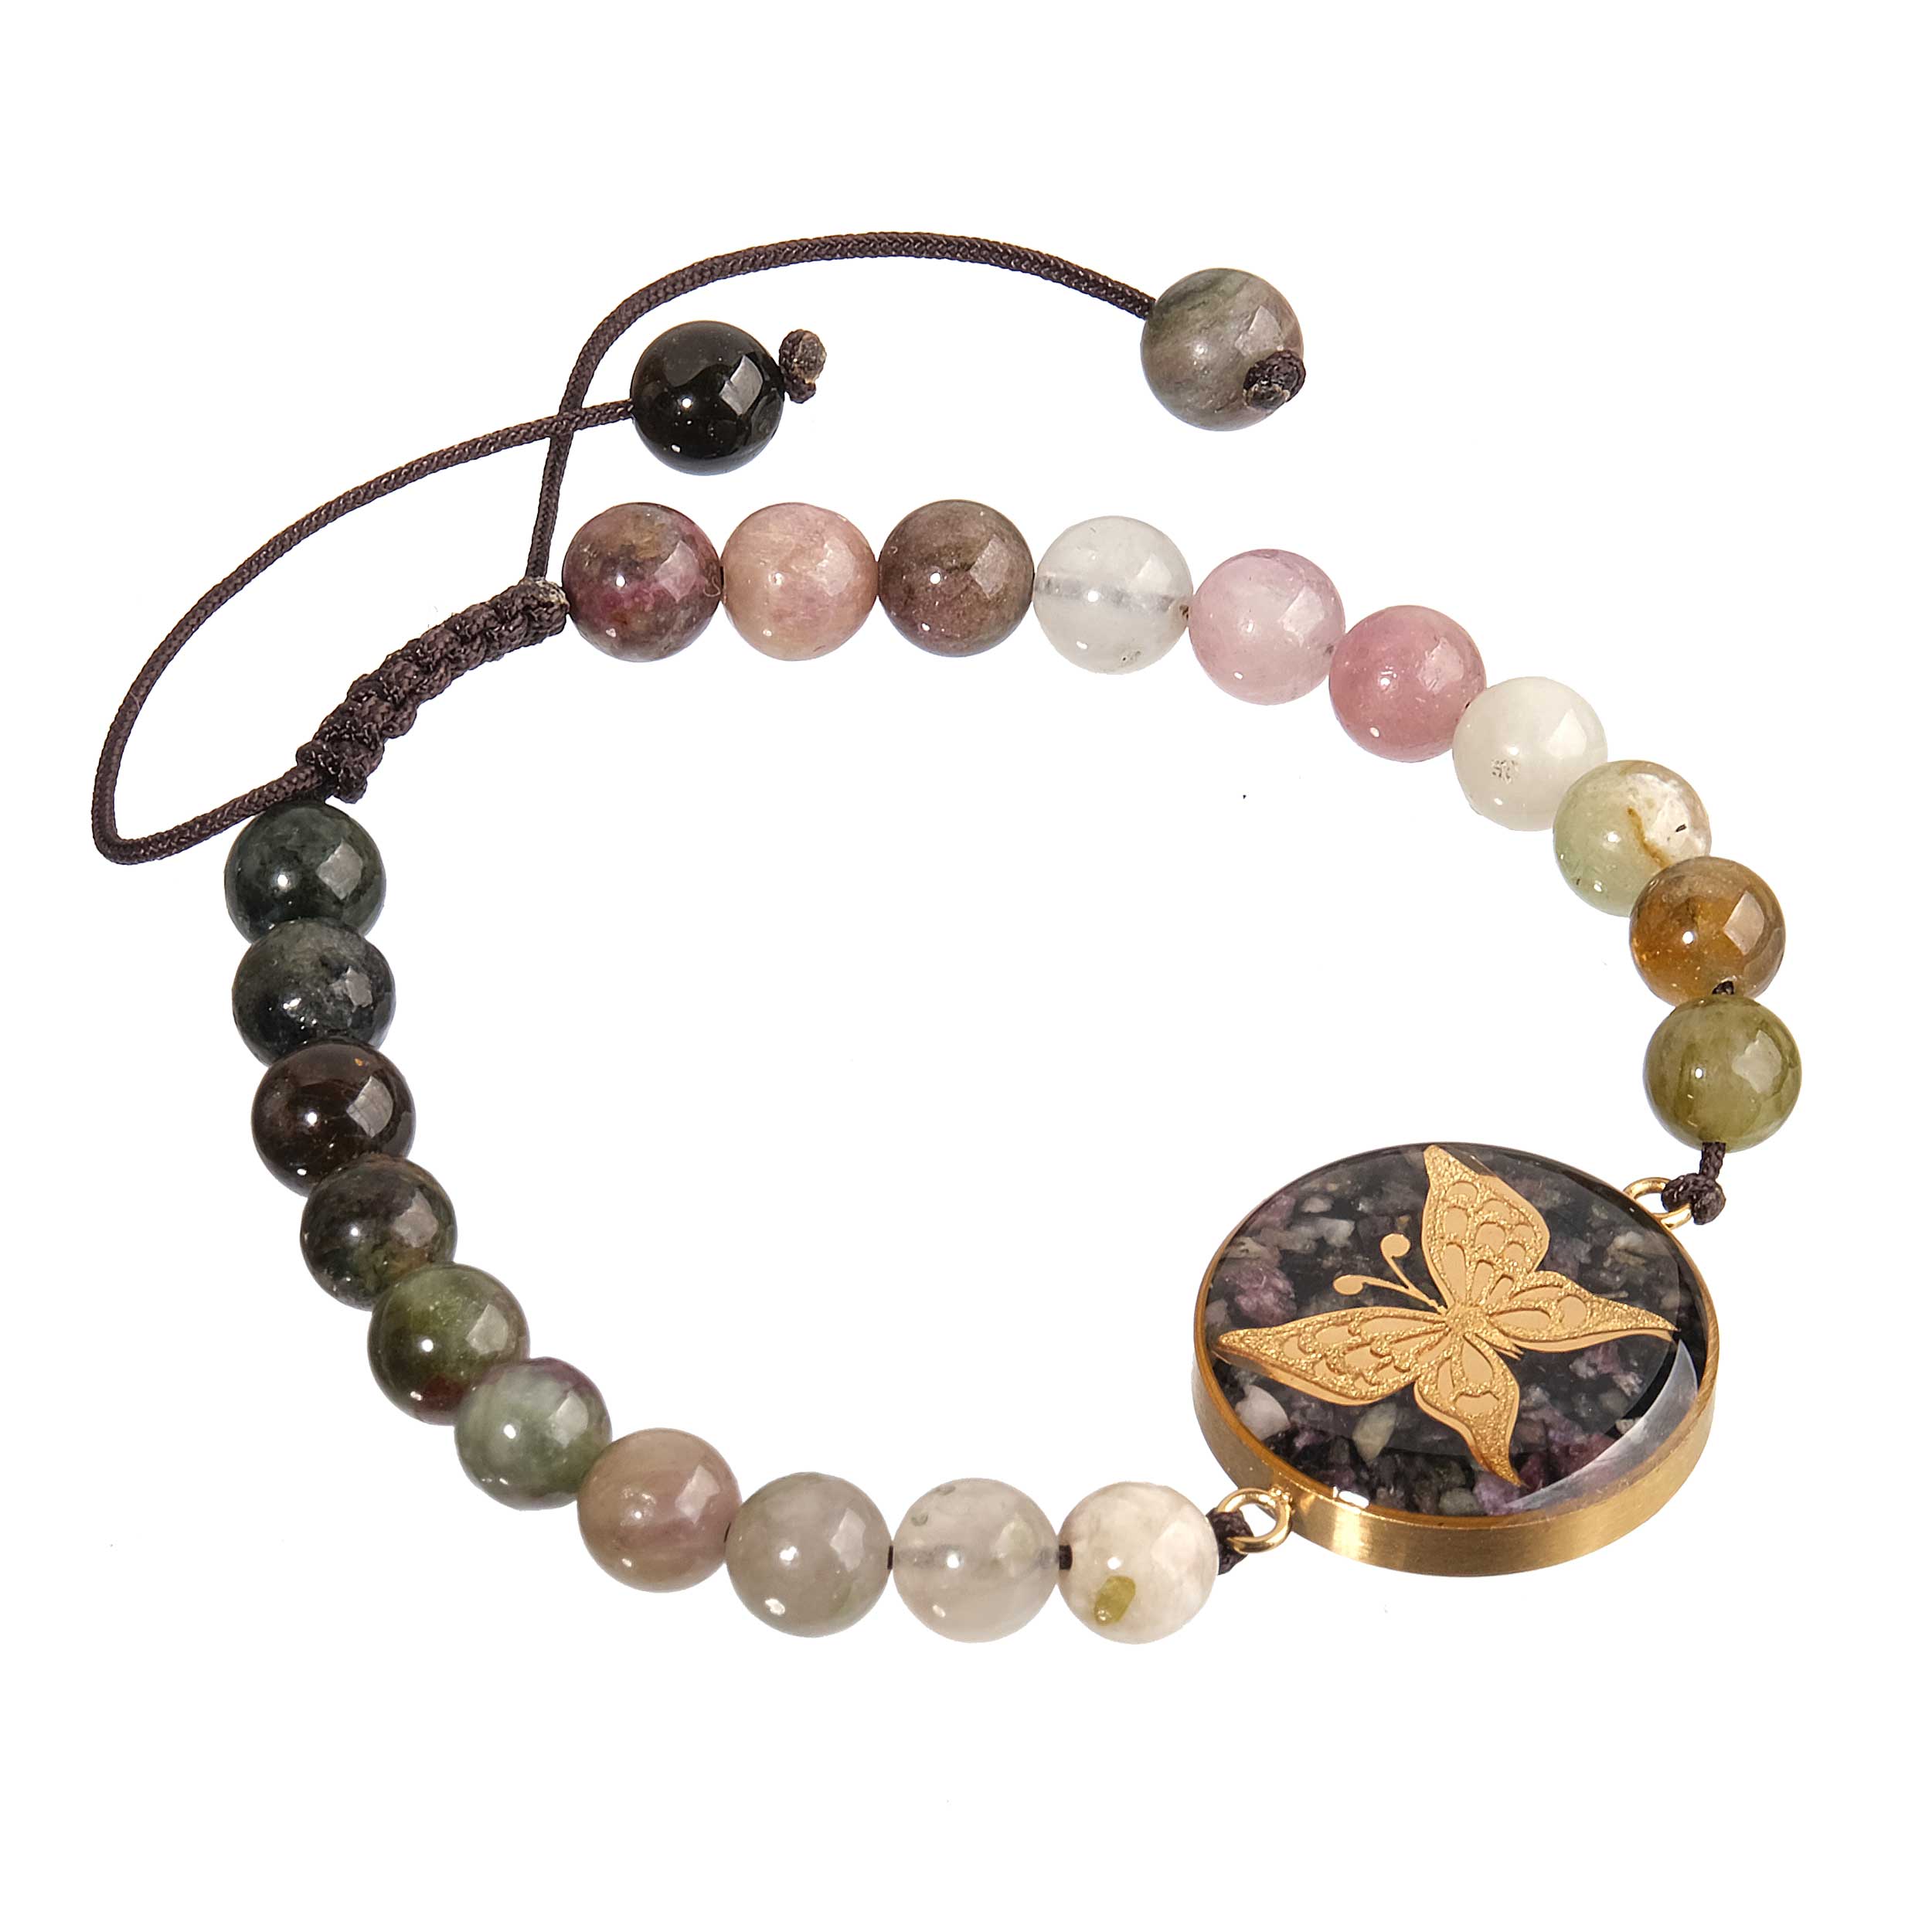 24 carat gold leaf tourmaline bracelet with butterfly design